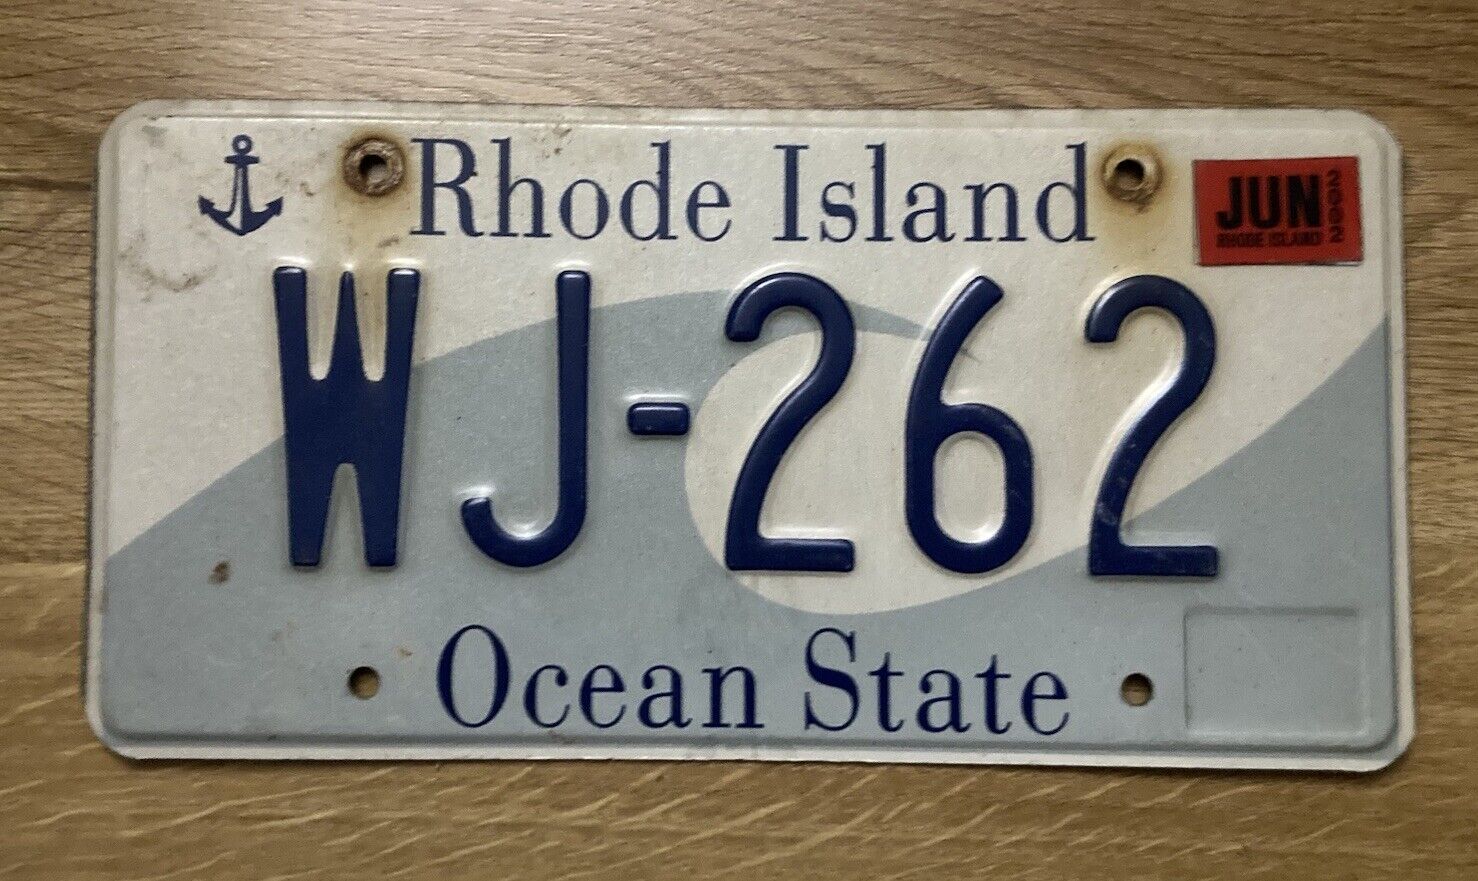 Original Used 2002 RHODE ISLAND Ocean State License Plate Wave WJ 262